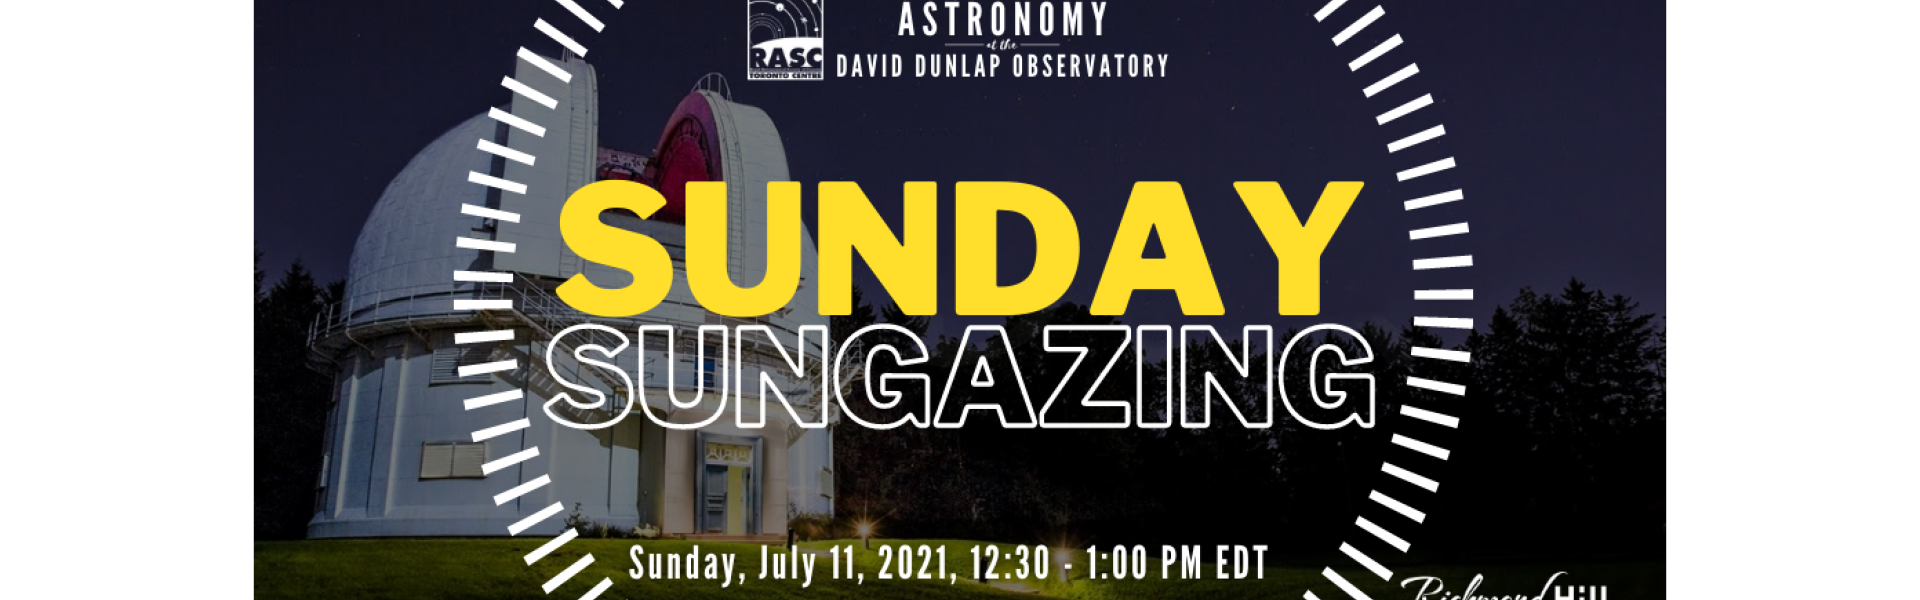 Sunday Sungazing July 11